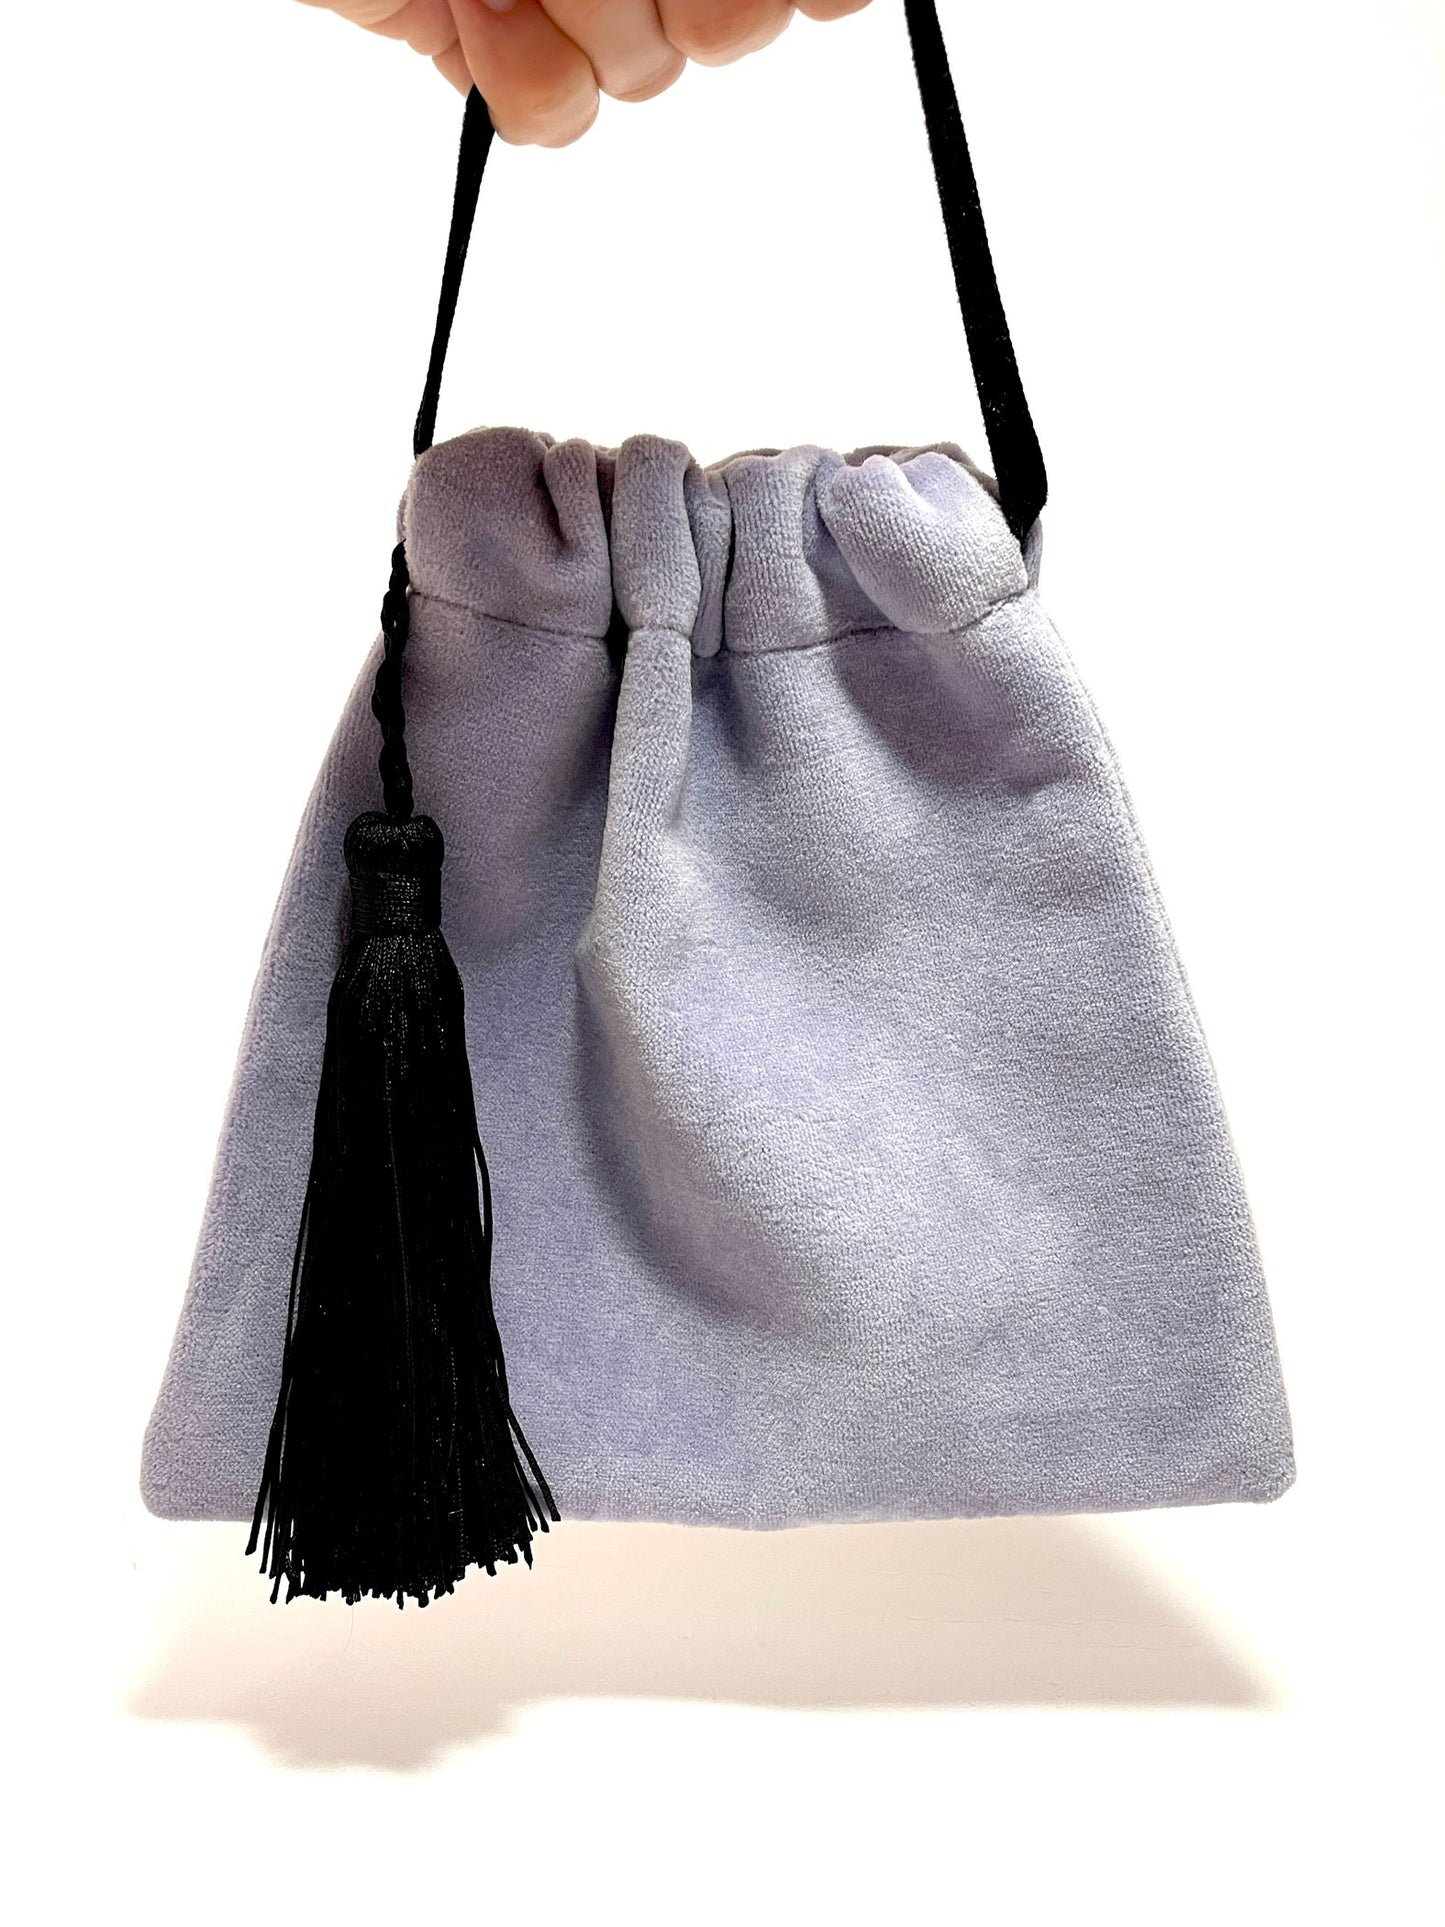 Lavender little handbag